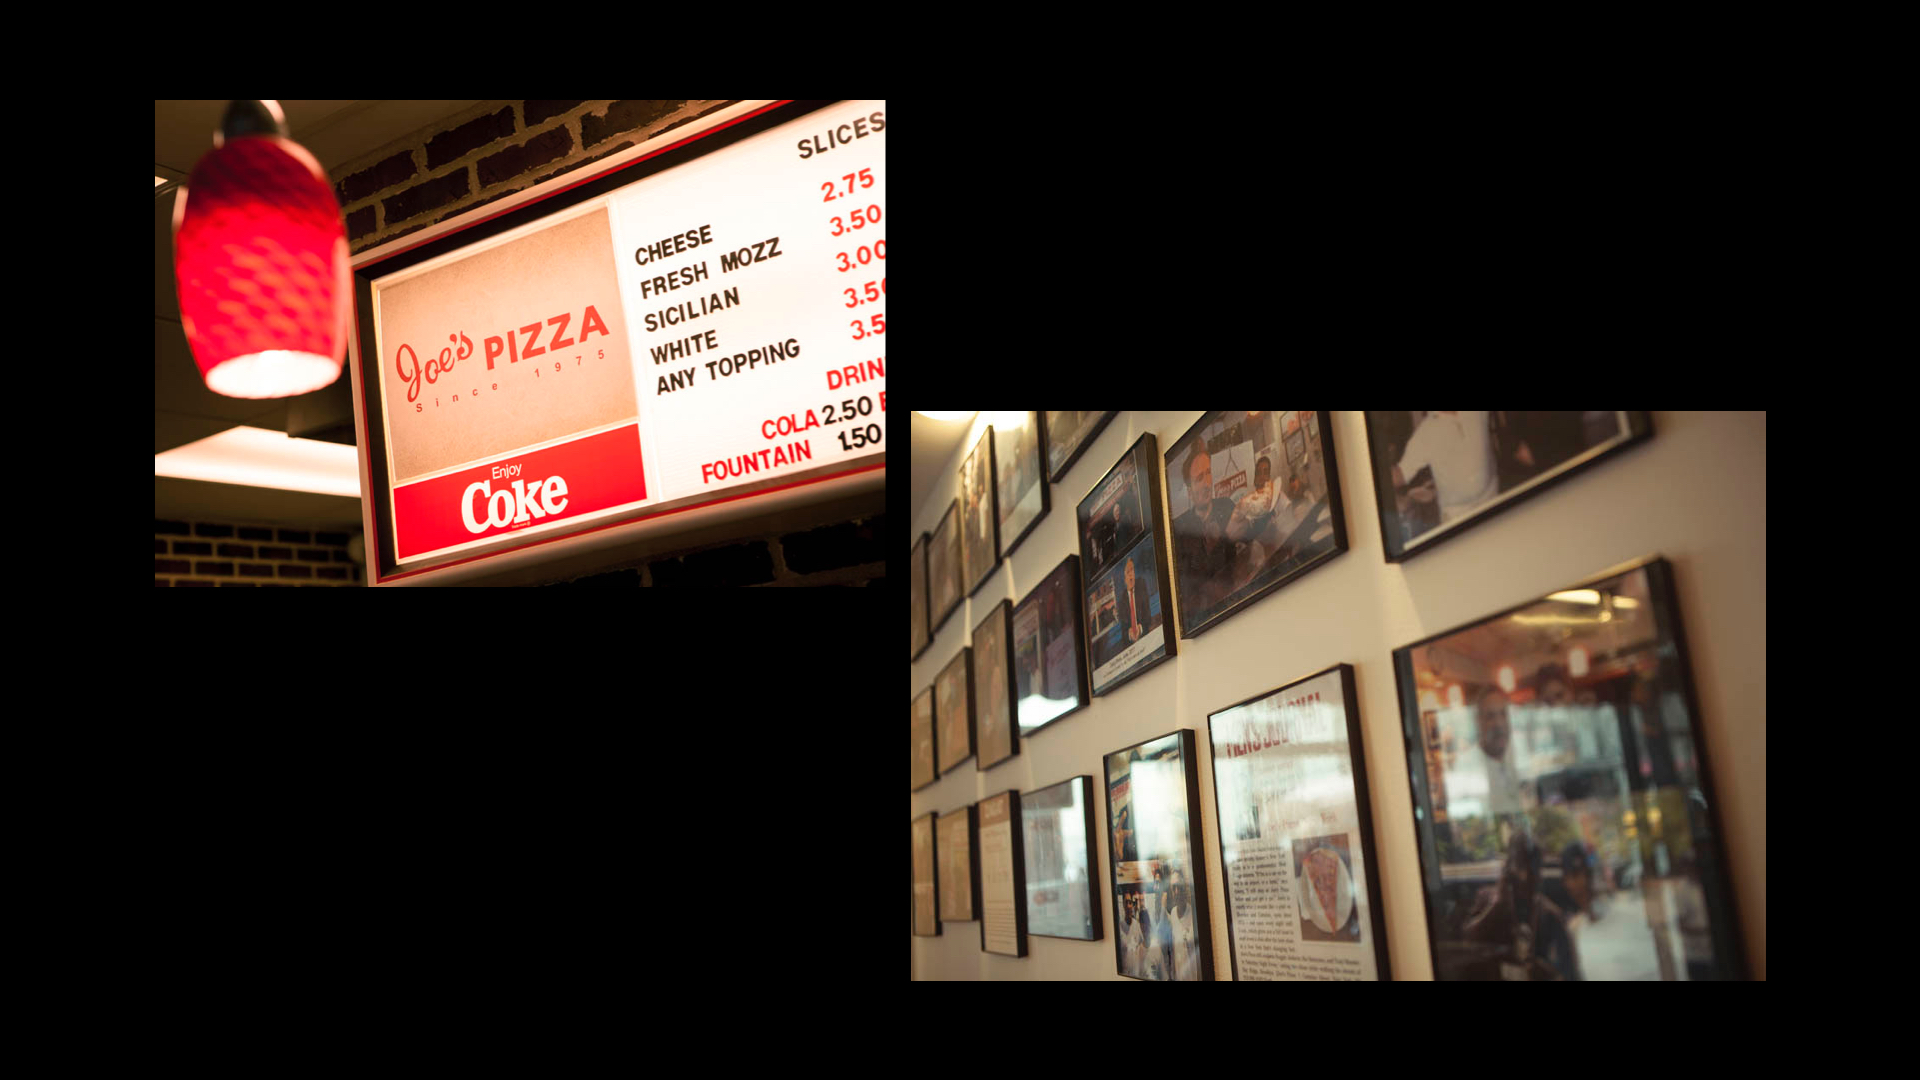 Photos of the menu and the photographs hung up at Joe's.